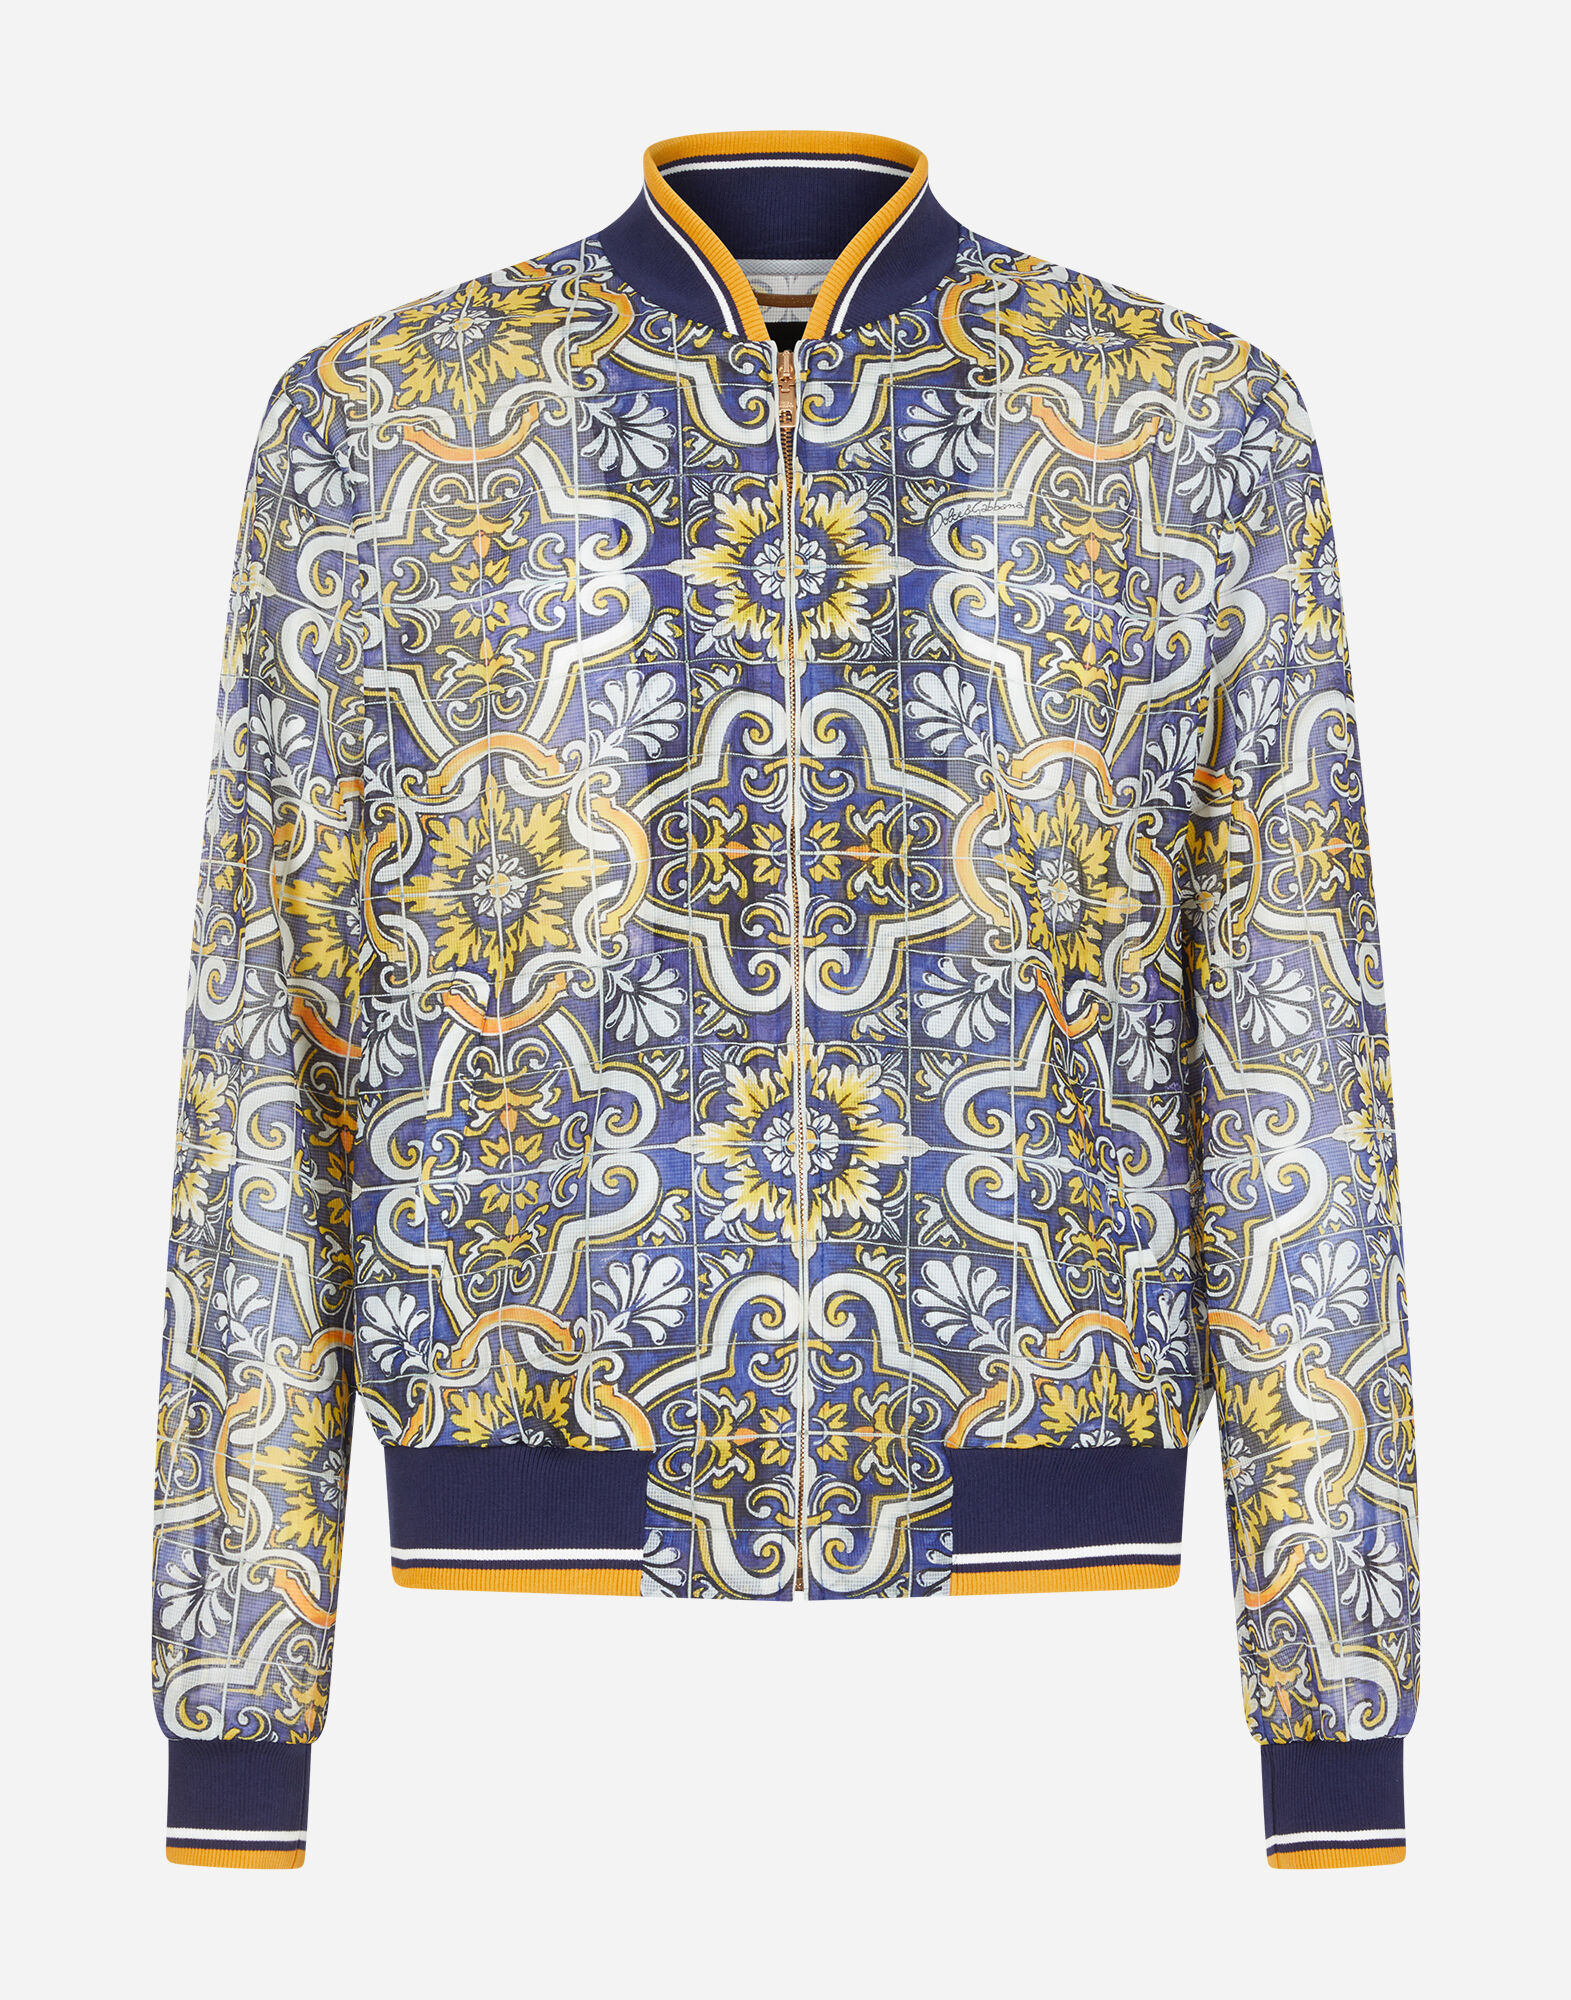 Nylon jacket with maiolica print